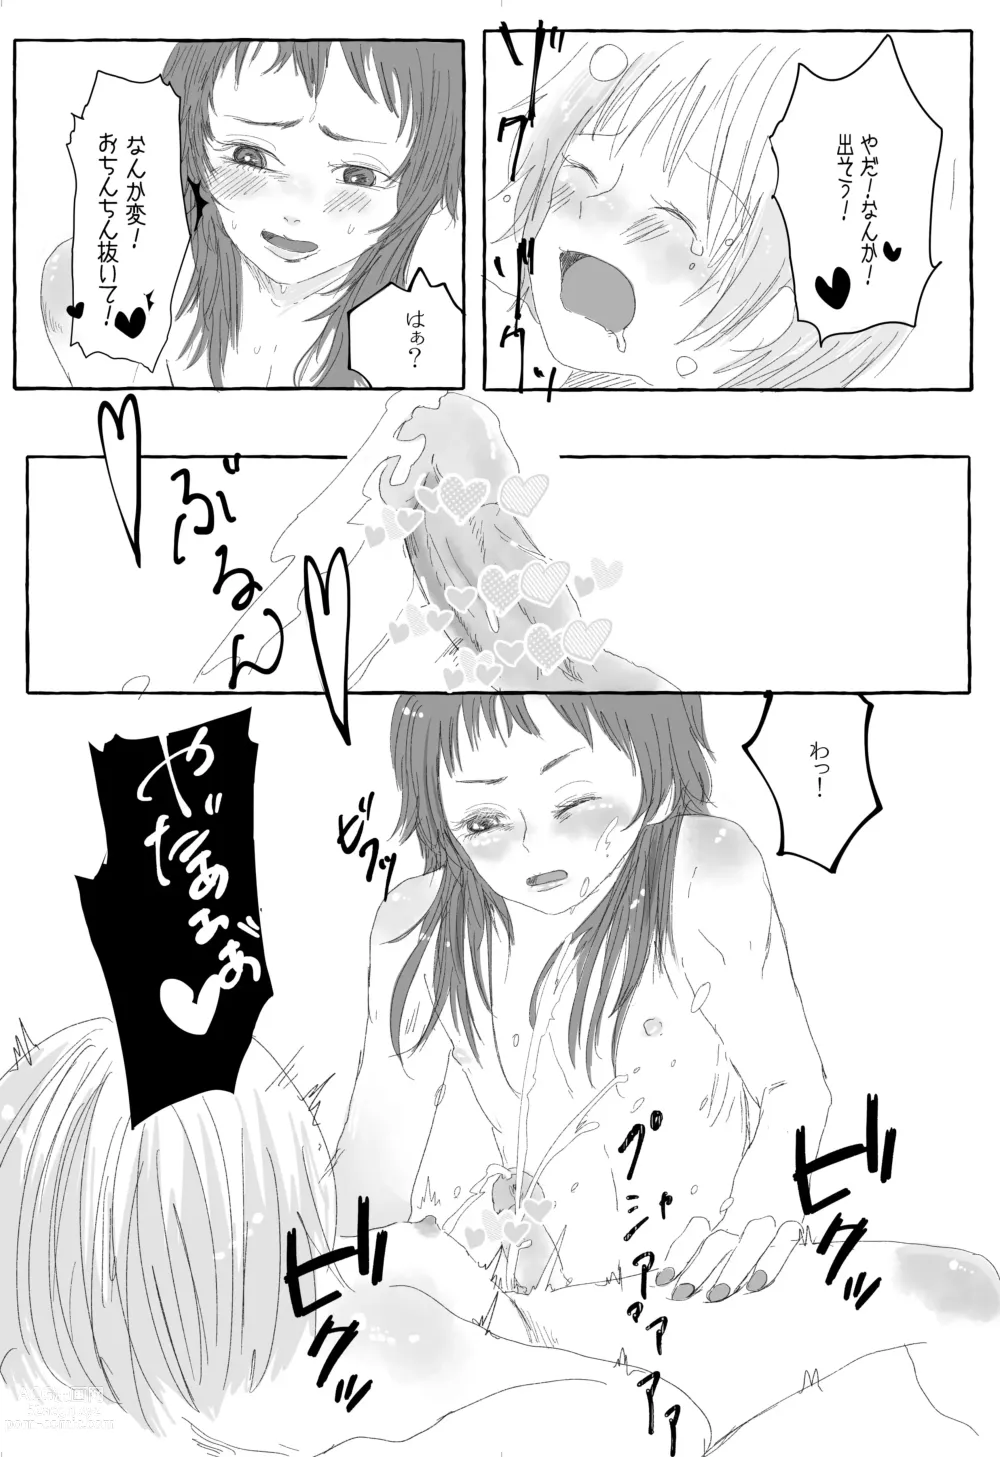 Page 15 of doujinshi Raki Shu Ero Manga